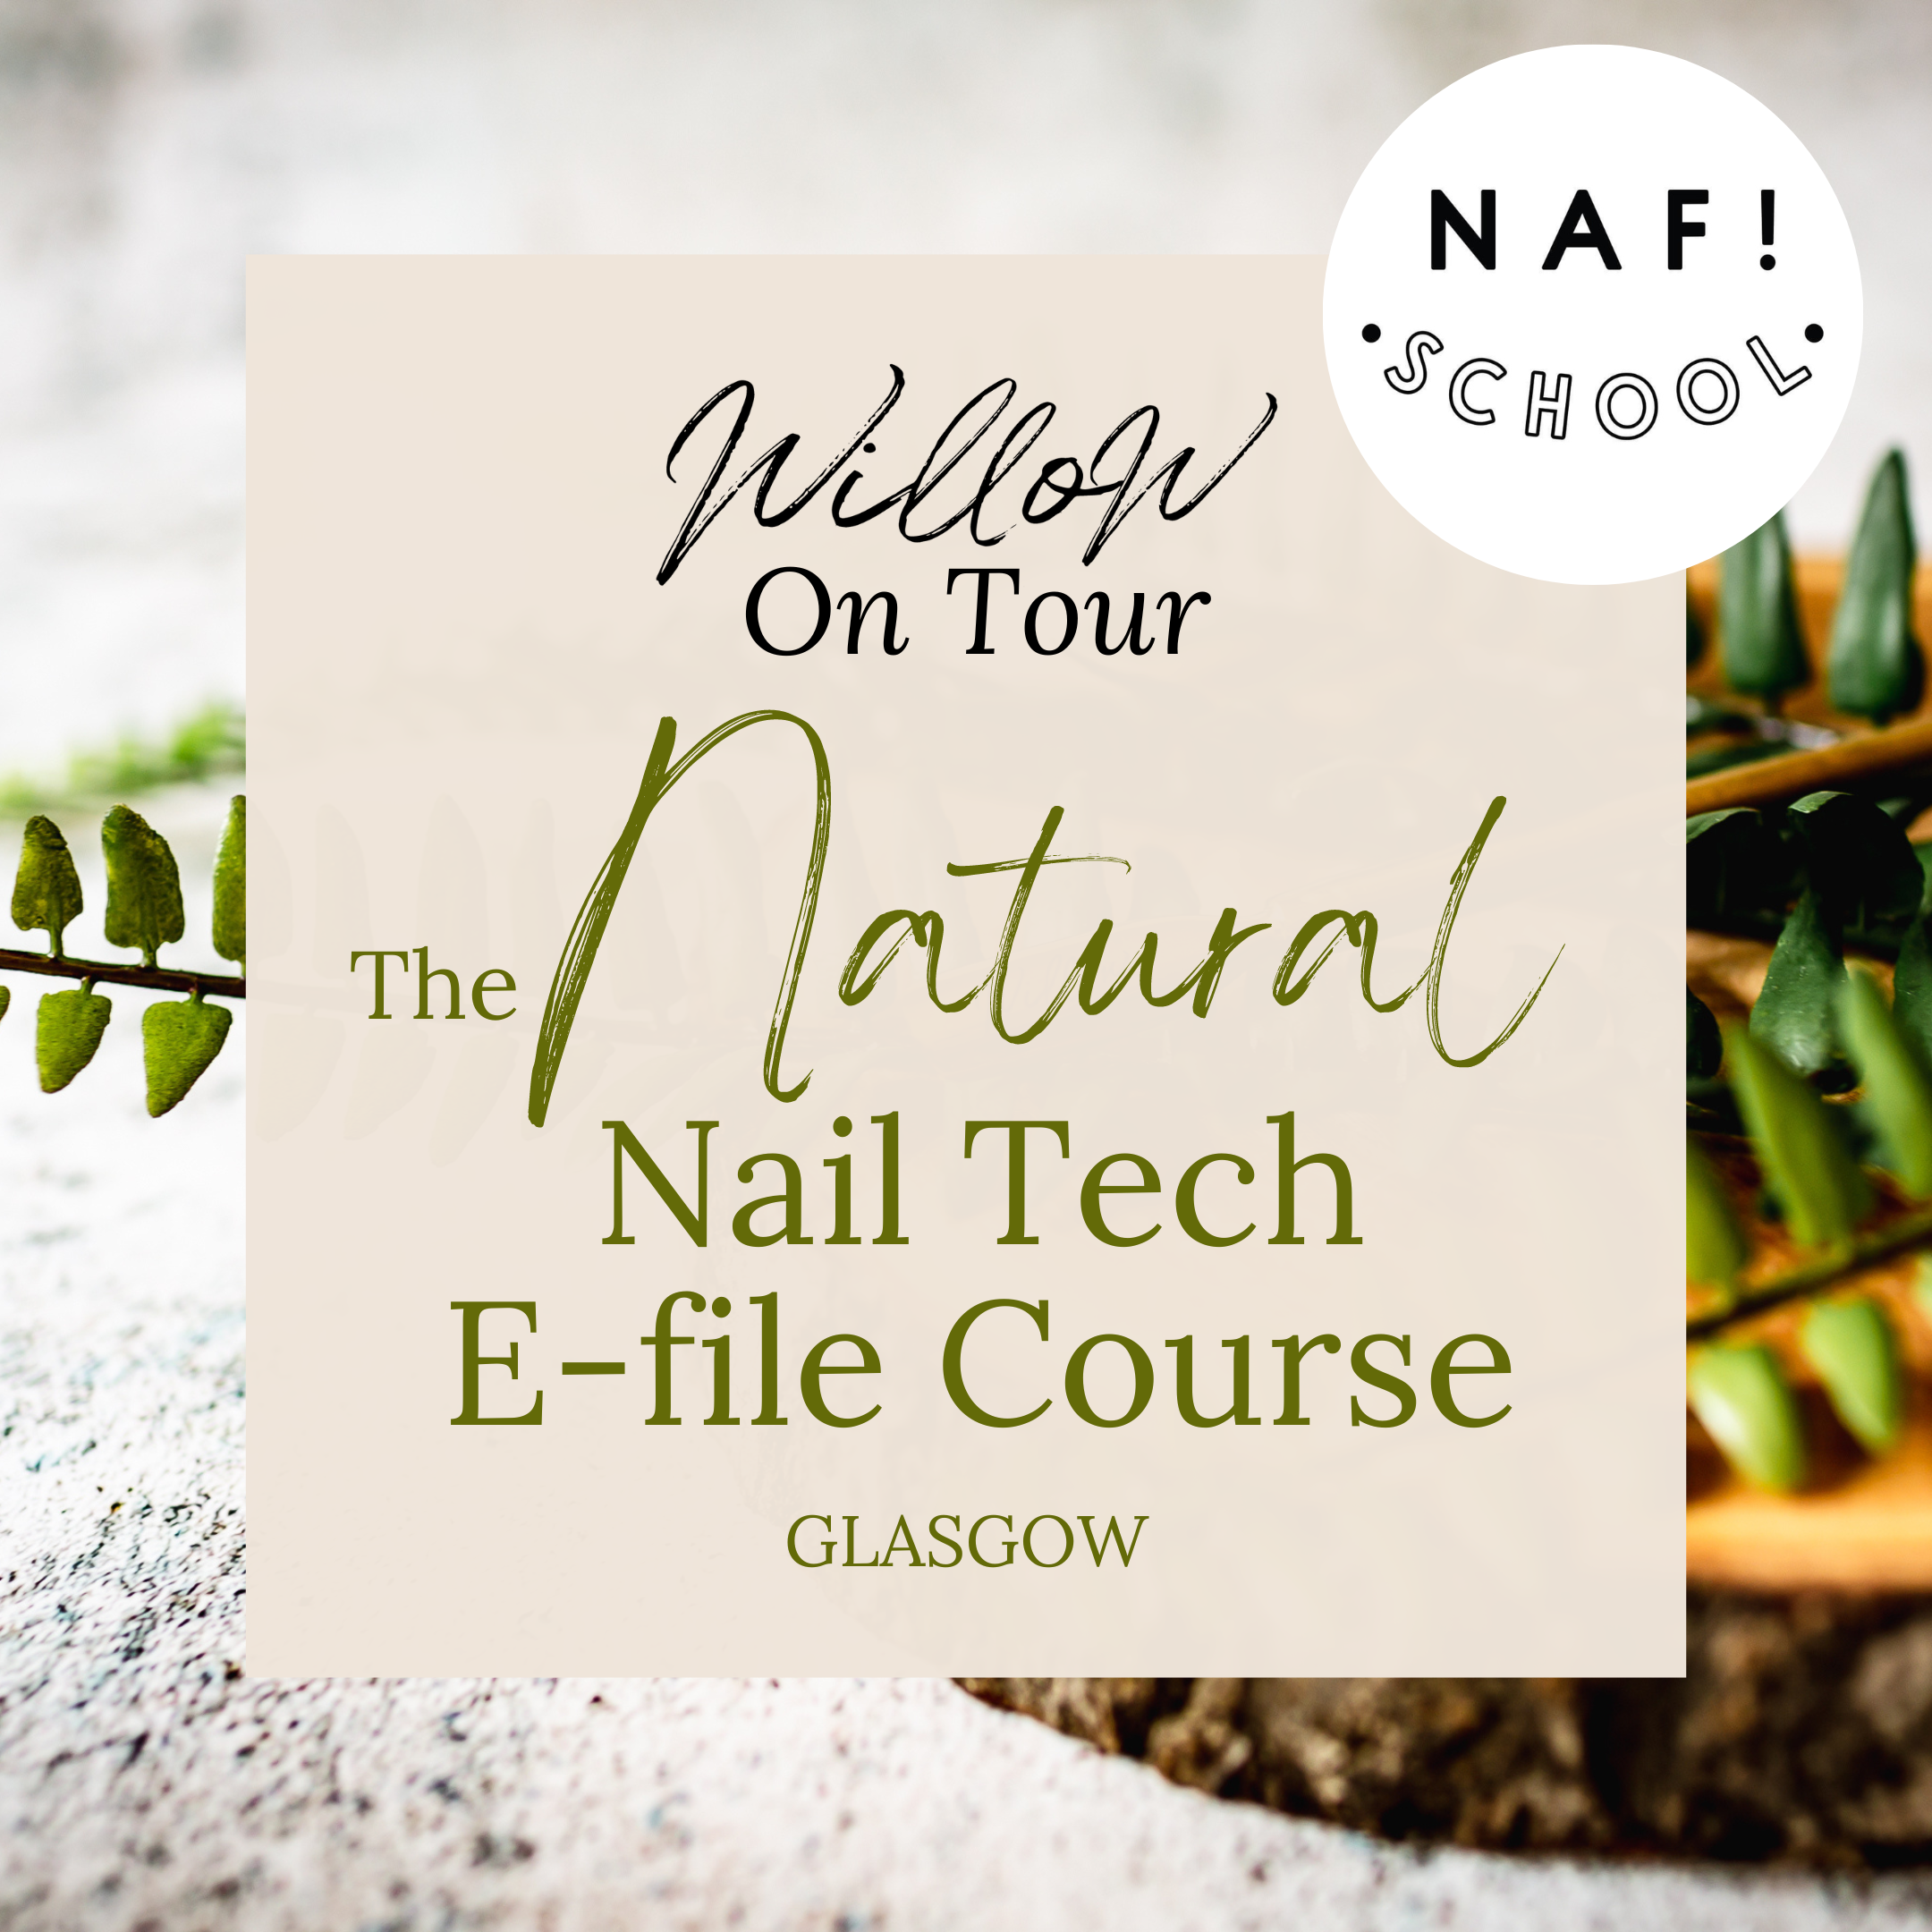 Willow On Tour: The Natural Nail Tech E-file Course - Glasgow